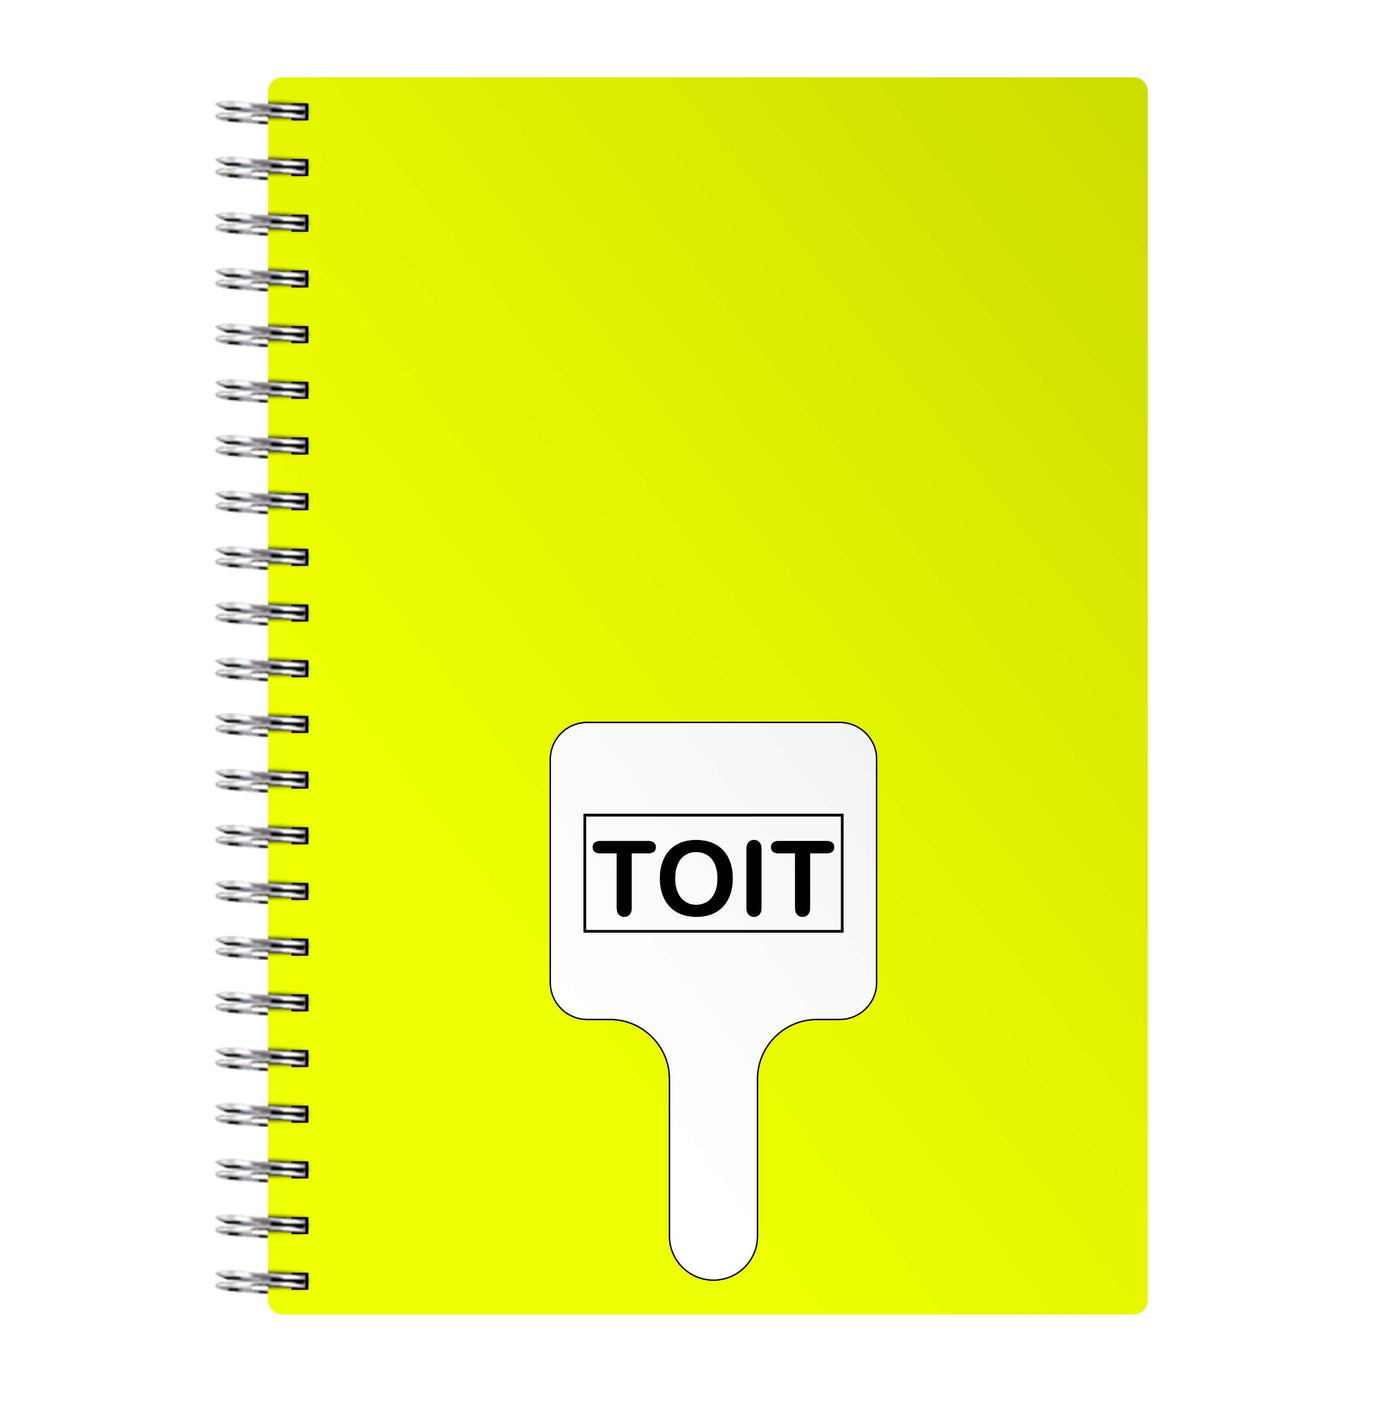 Toit - Brooklyn Nine-Nine Notebook